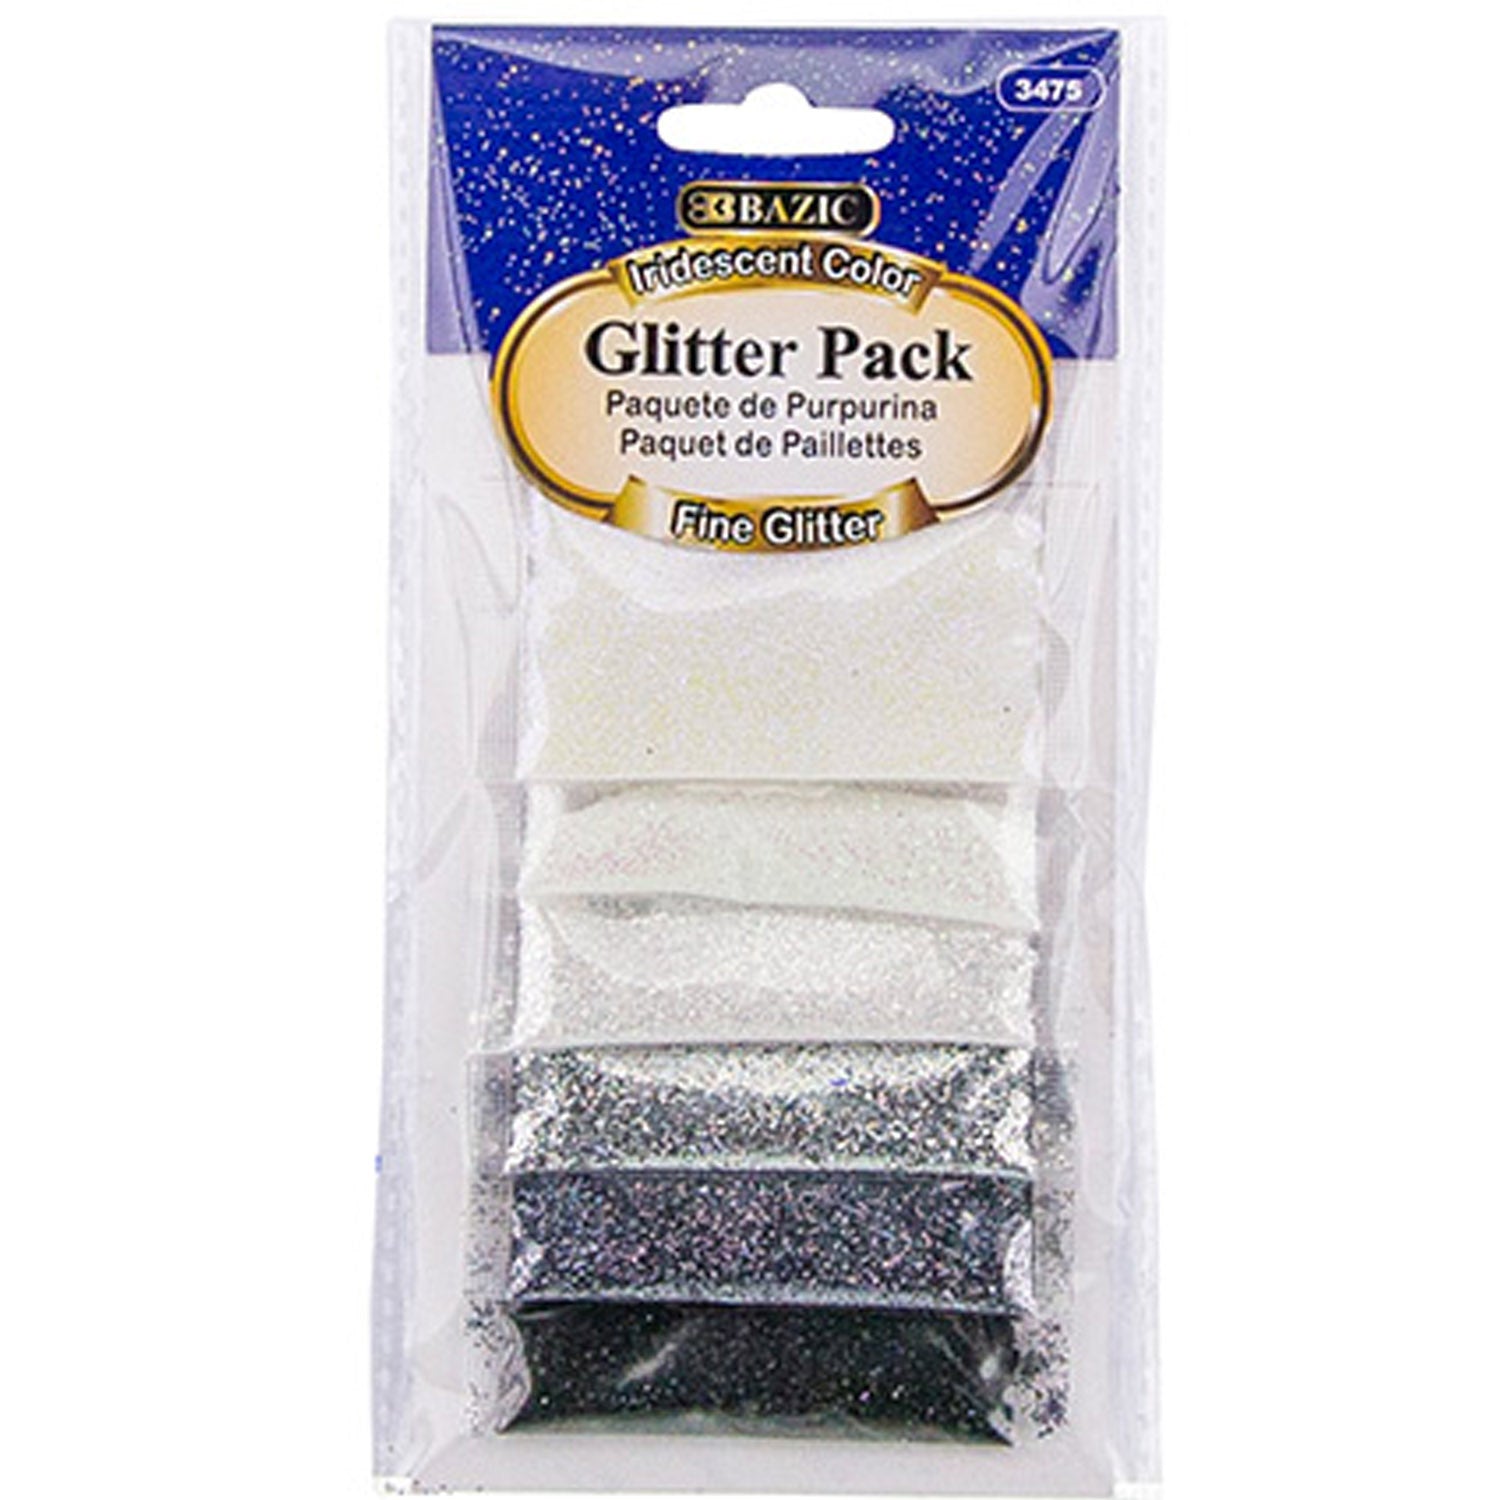 Iridescent Color Glitter Pack | 0.07 oz (2g)